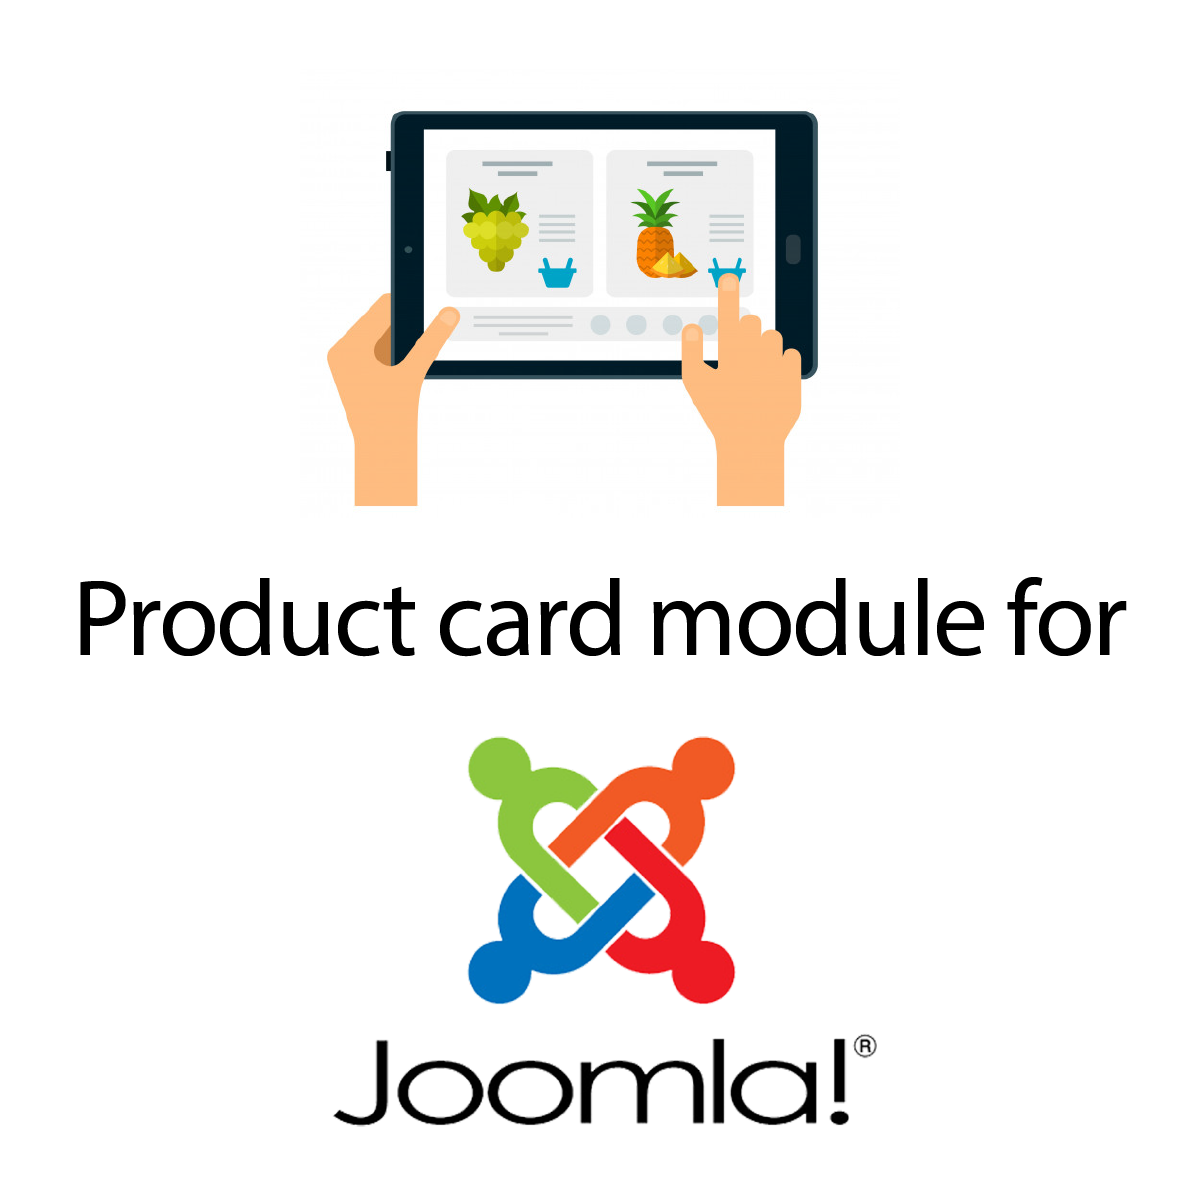 Product card module